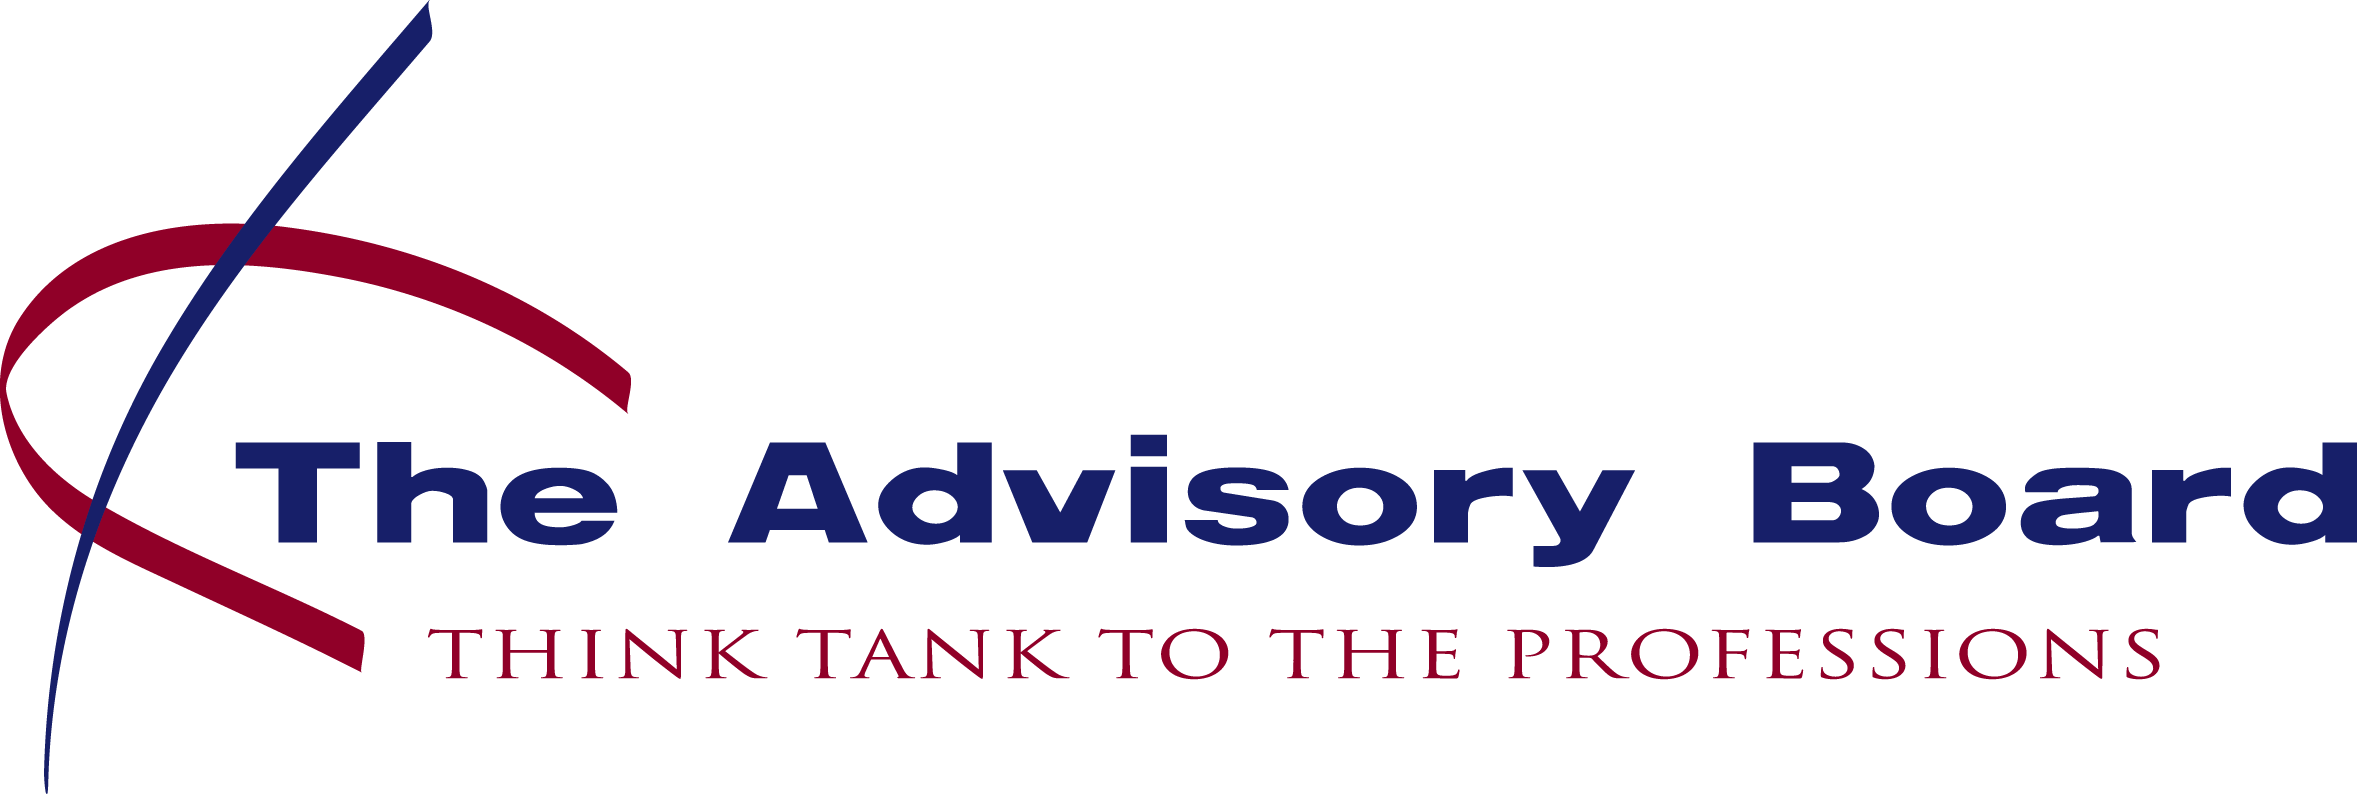 Advisory_Board_Logo_for_Web.5433e74d195a7